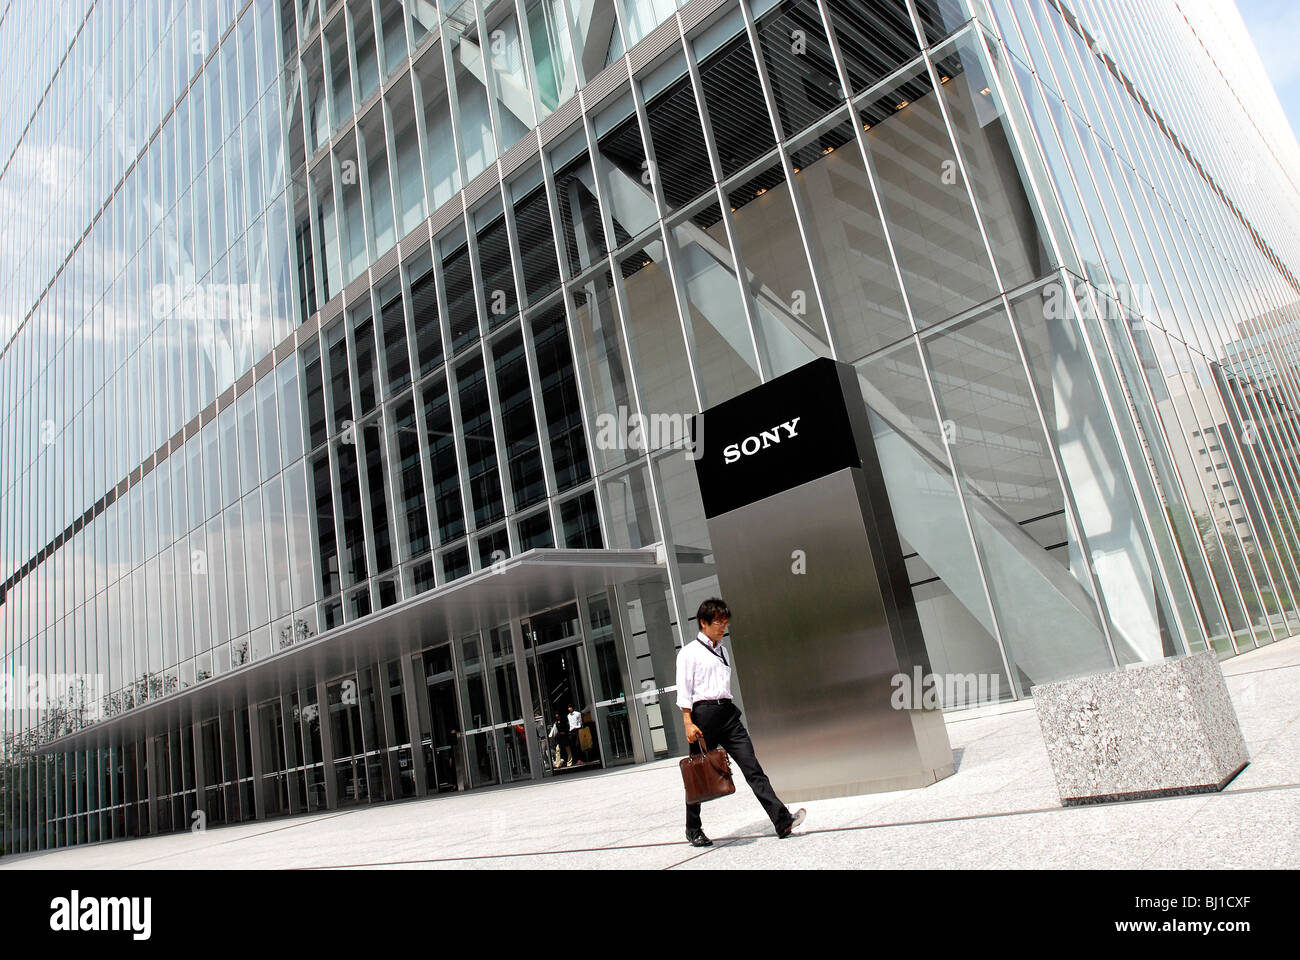 Sony Corporation - Photo Gallery